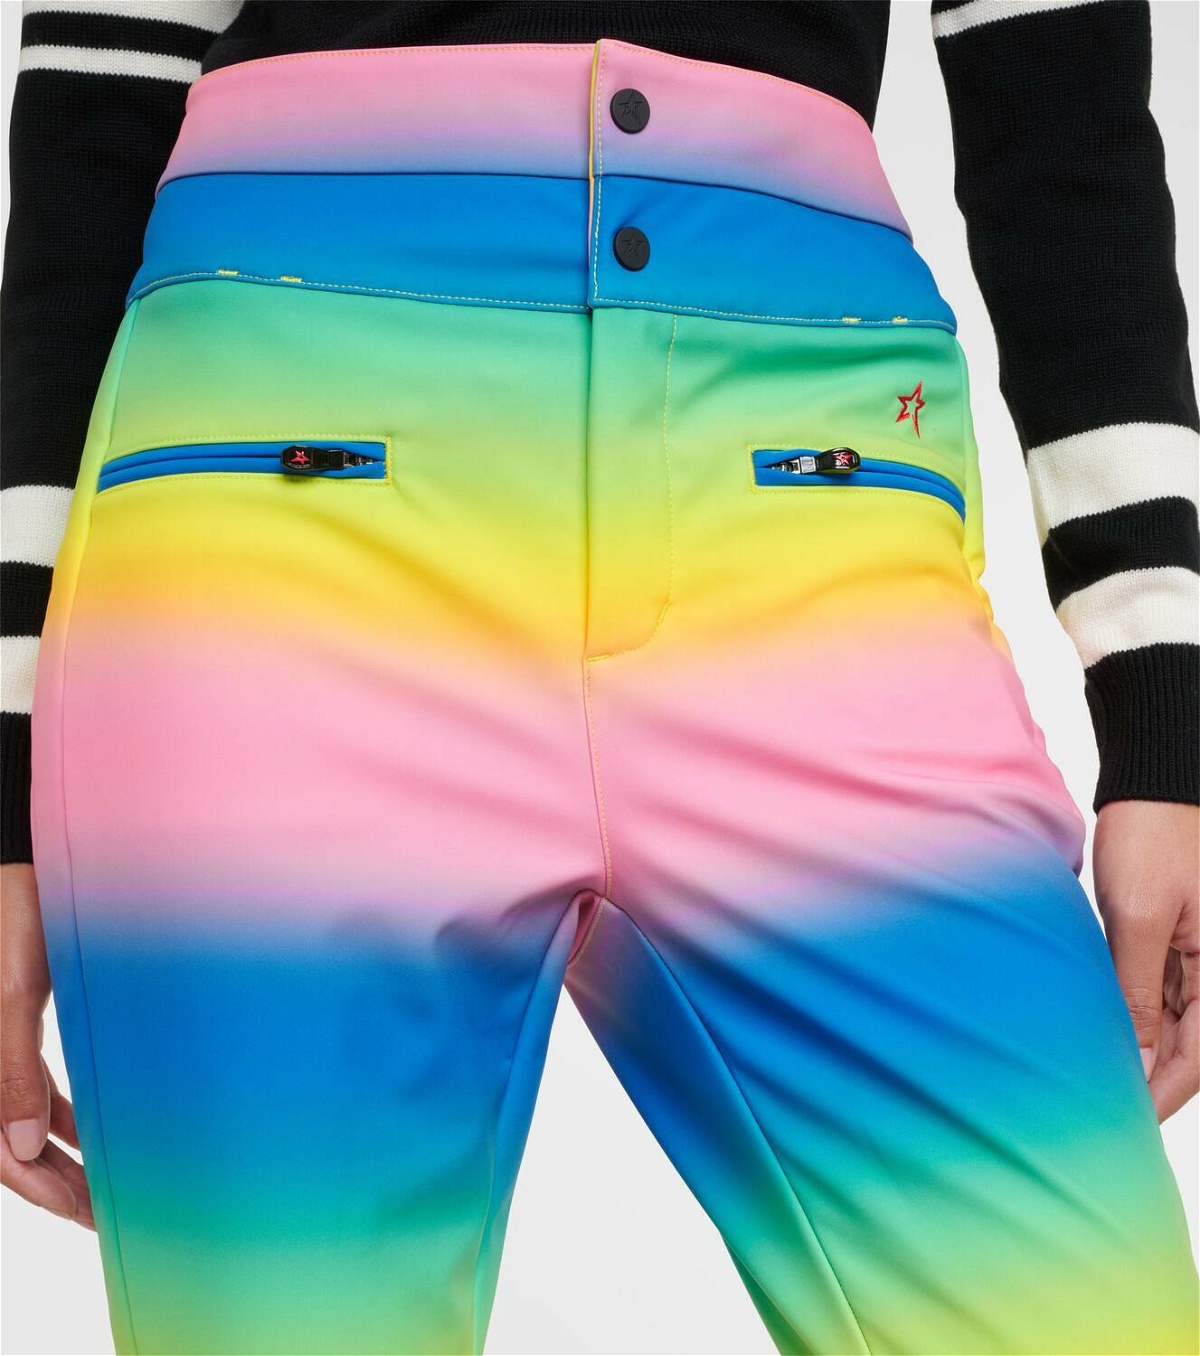 Perfect Moment 'Aurora' ski trousers, Women's Clothing